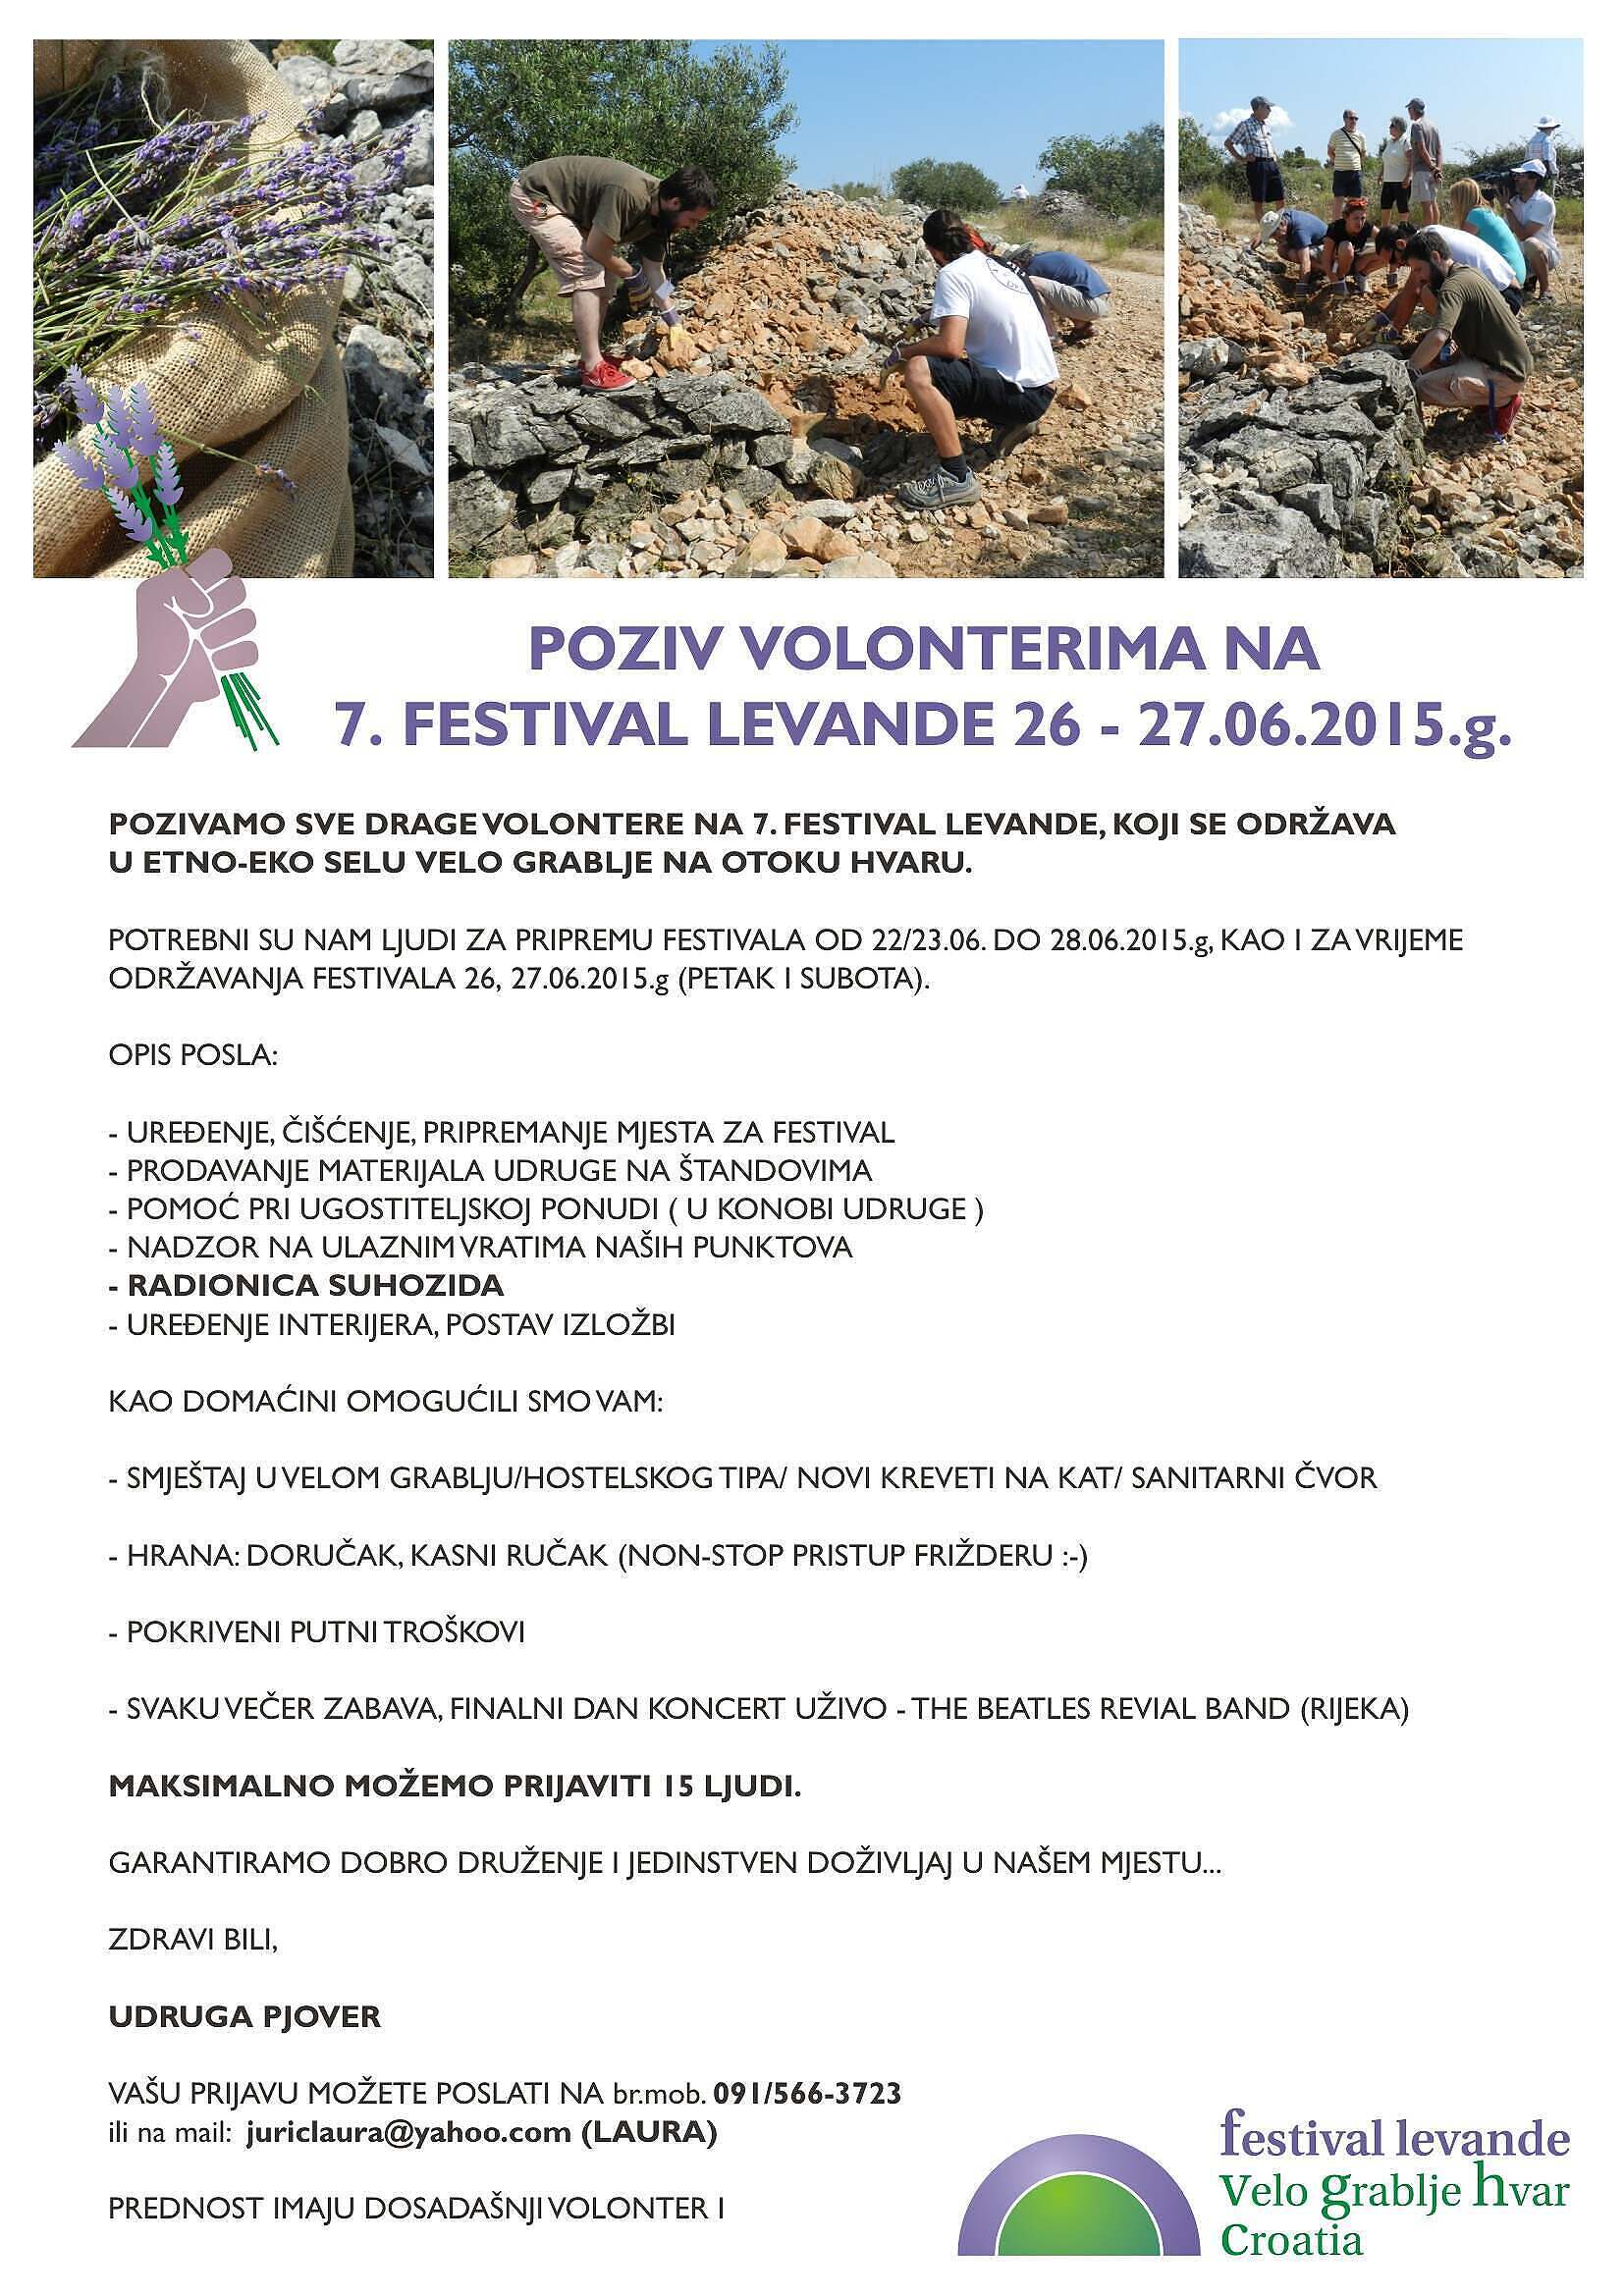 Poziv volonterima na 7. festival levande na Hvaru